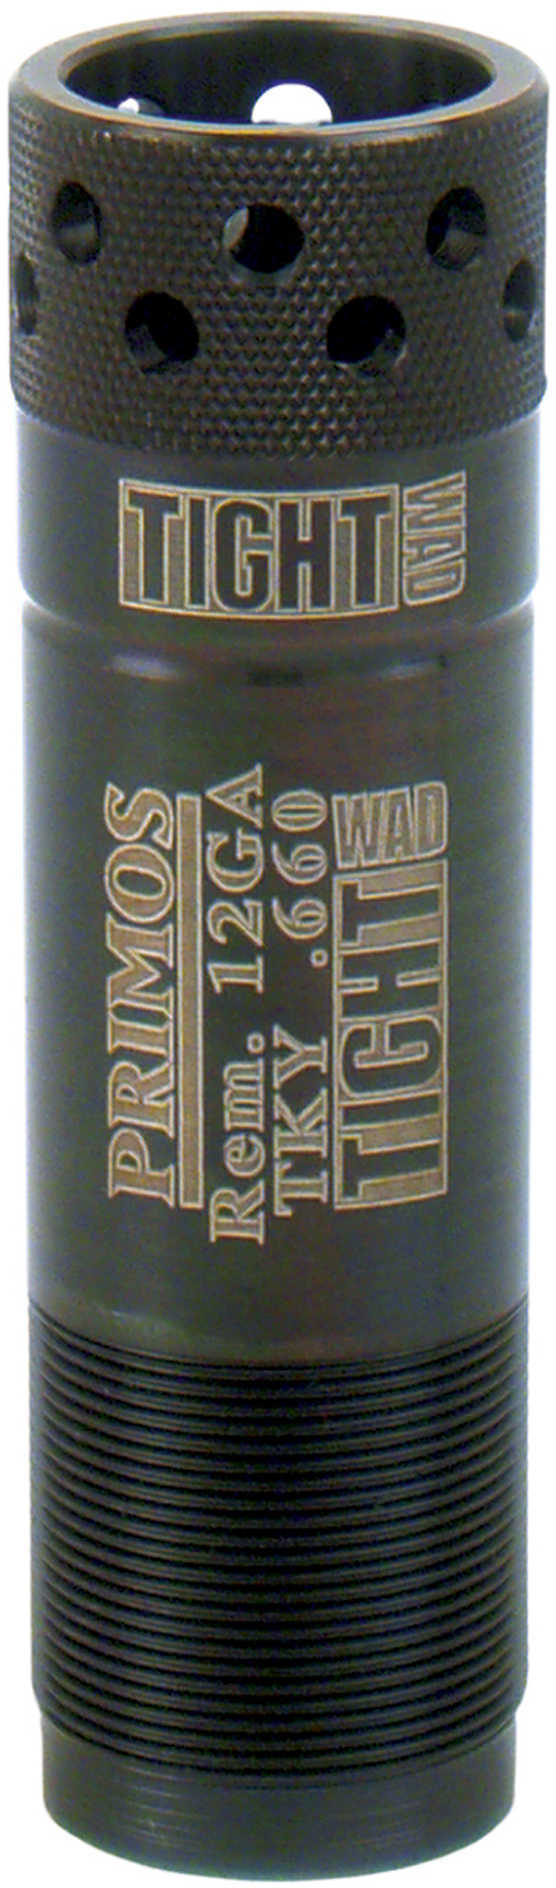 Primos Tight-Wad Choke Tube Remington 12Ga